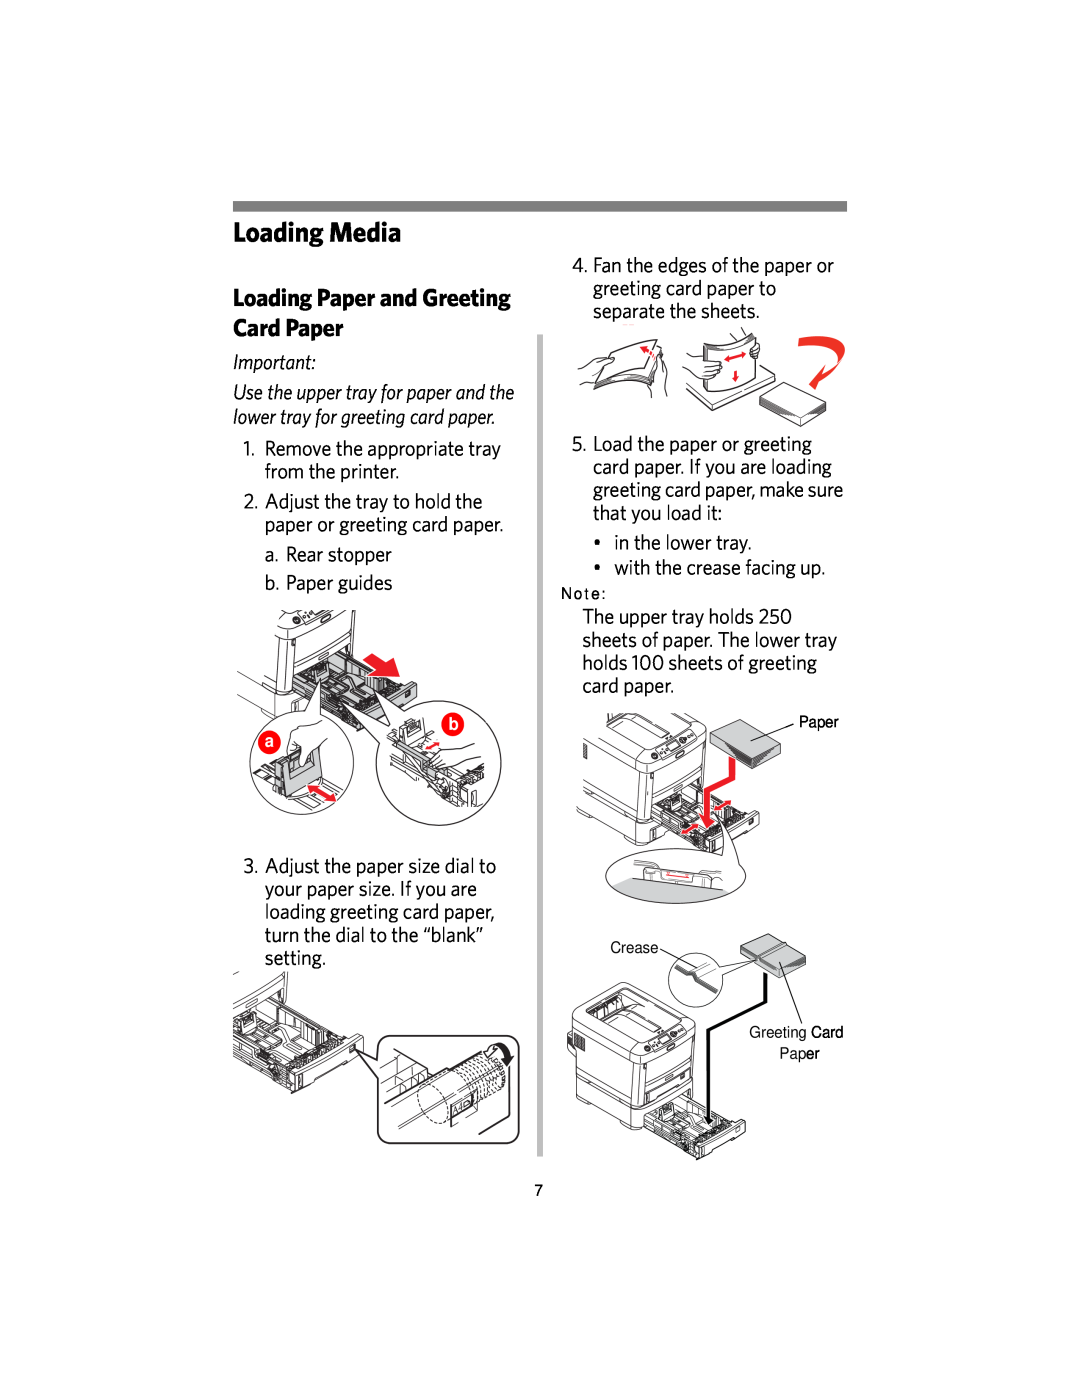 Kodak DL2100 manual Loading Media, Loading Paper and Greeting Card Paper 